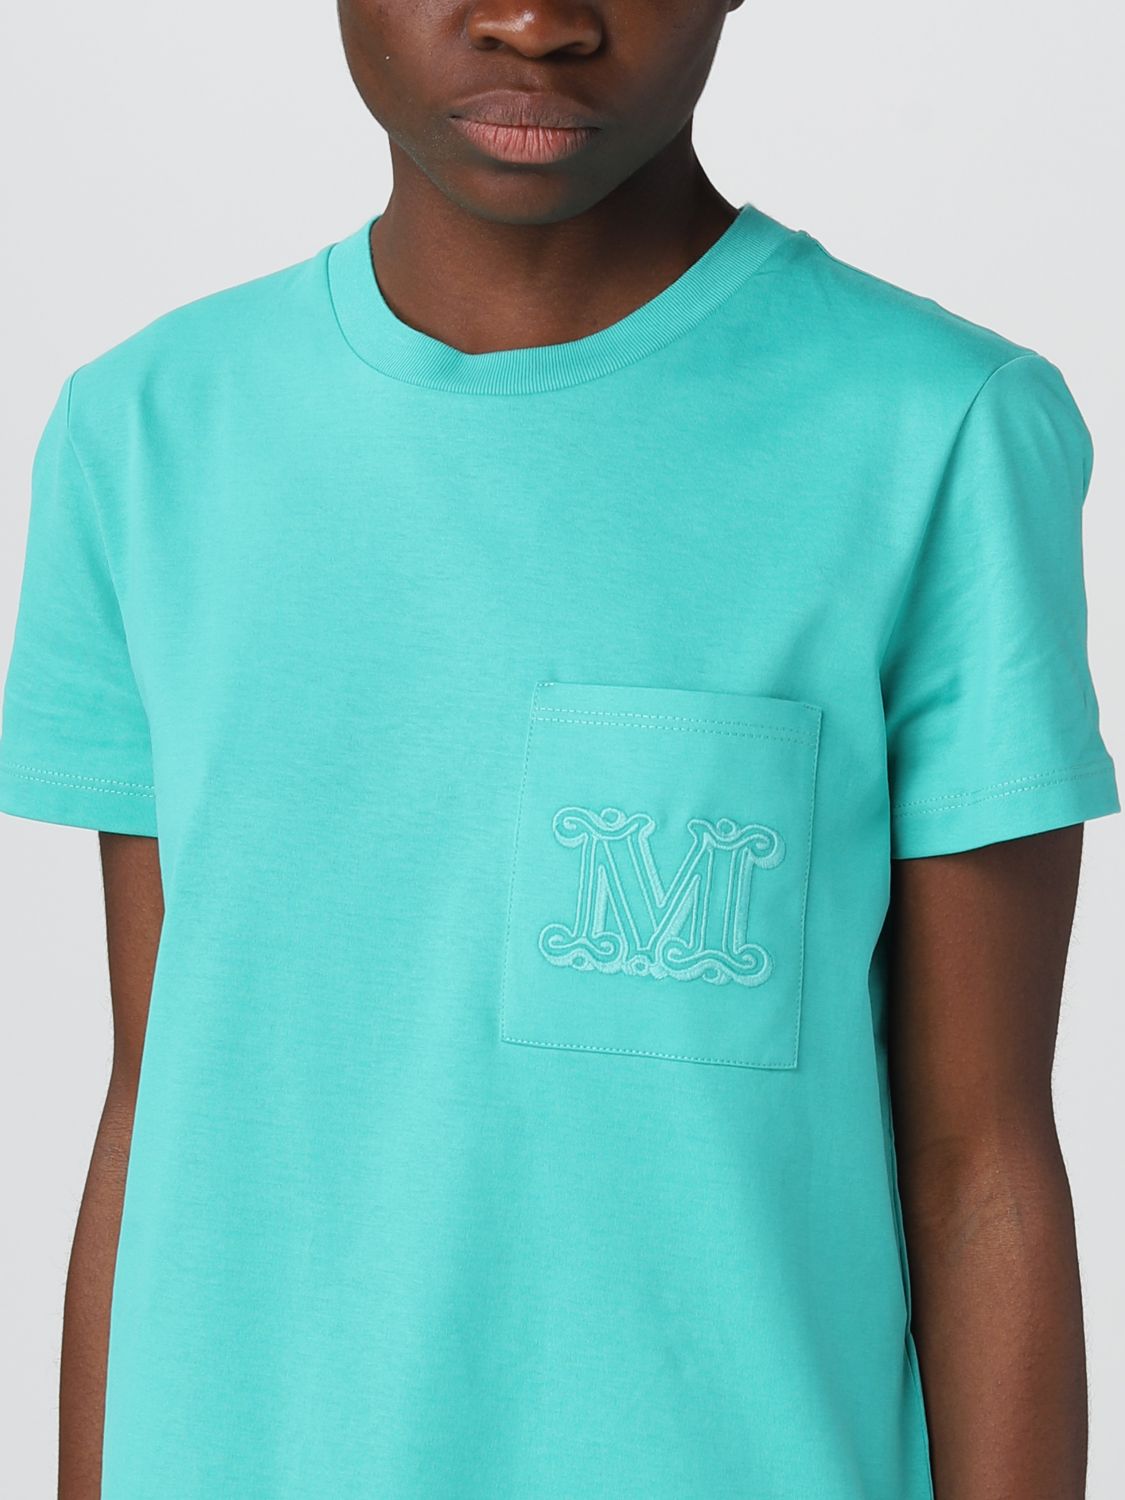 MAX MARA: cotton t-shirt - Green | Max Mara t-shirt 2319410232600 ...